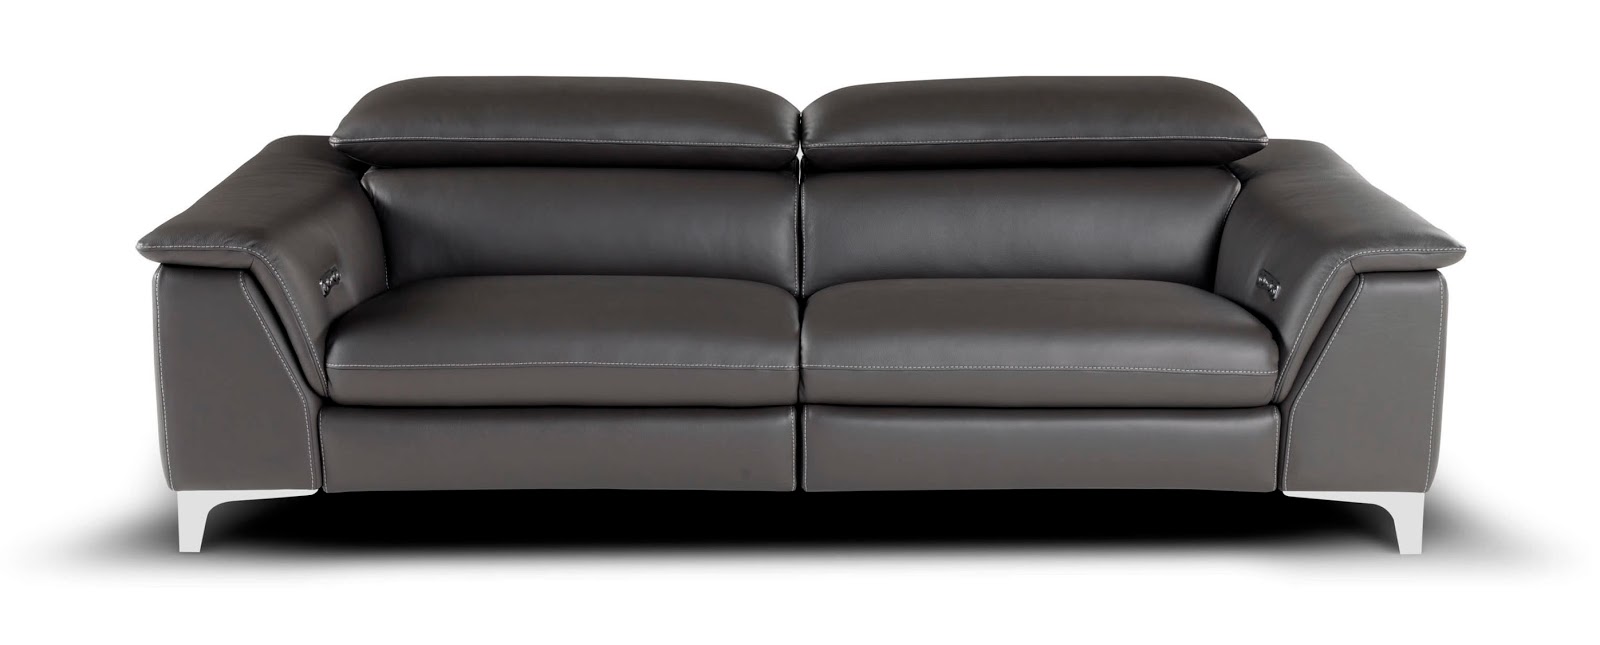 costco leather sofa sets on sale